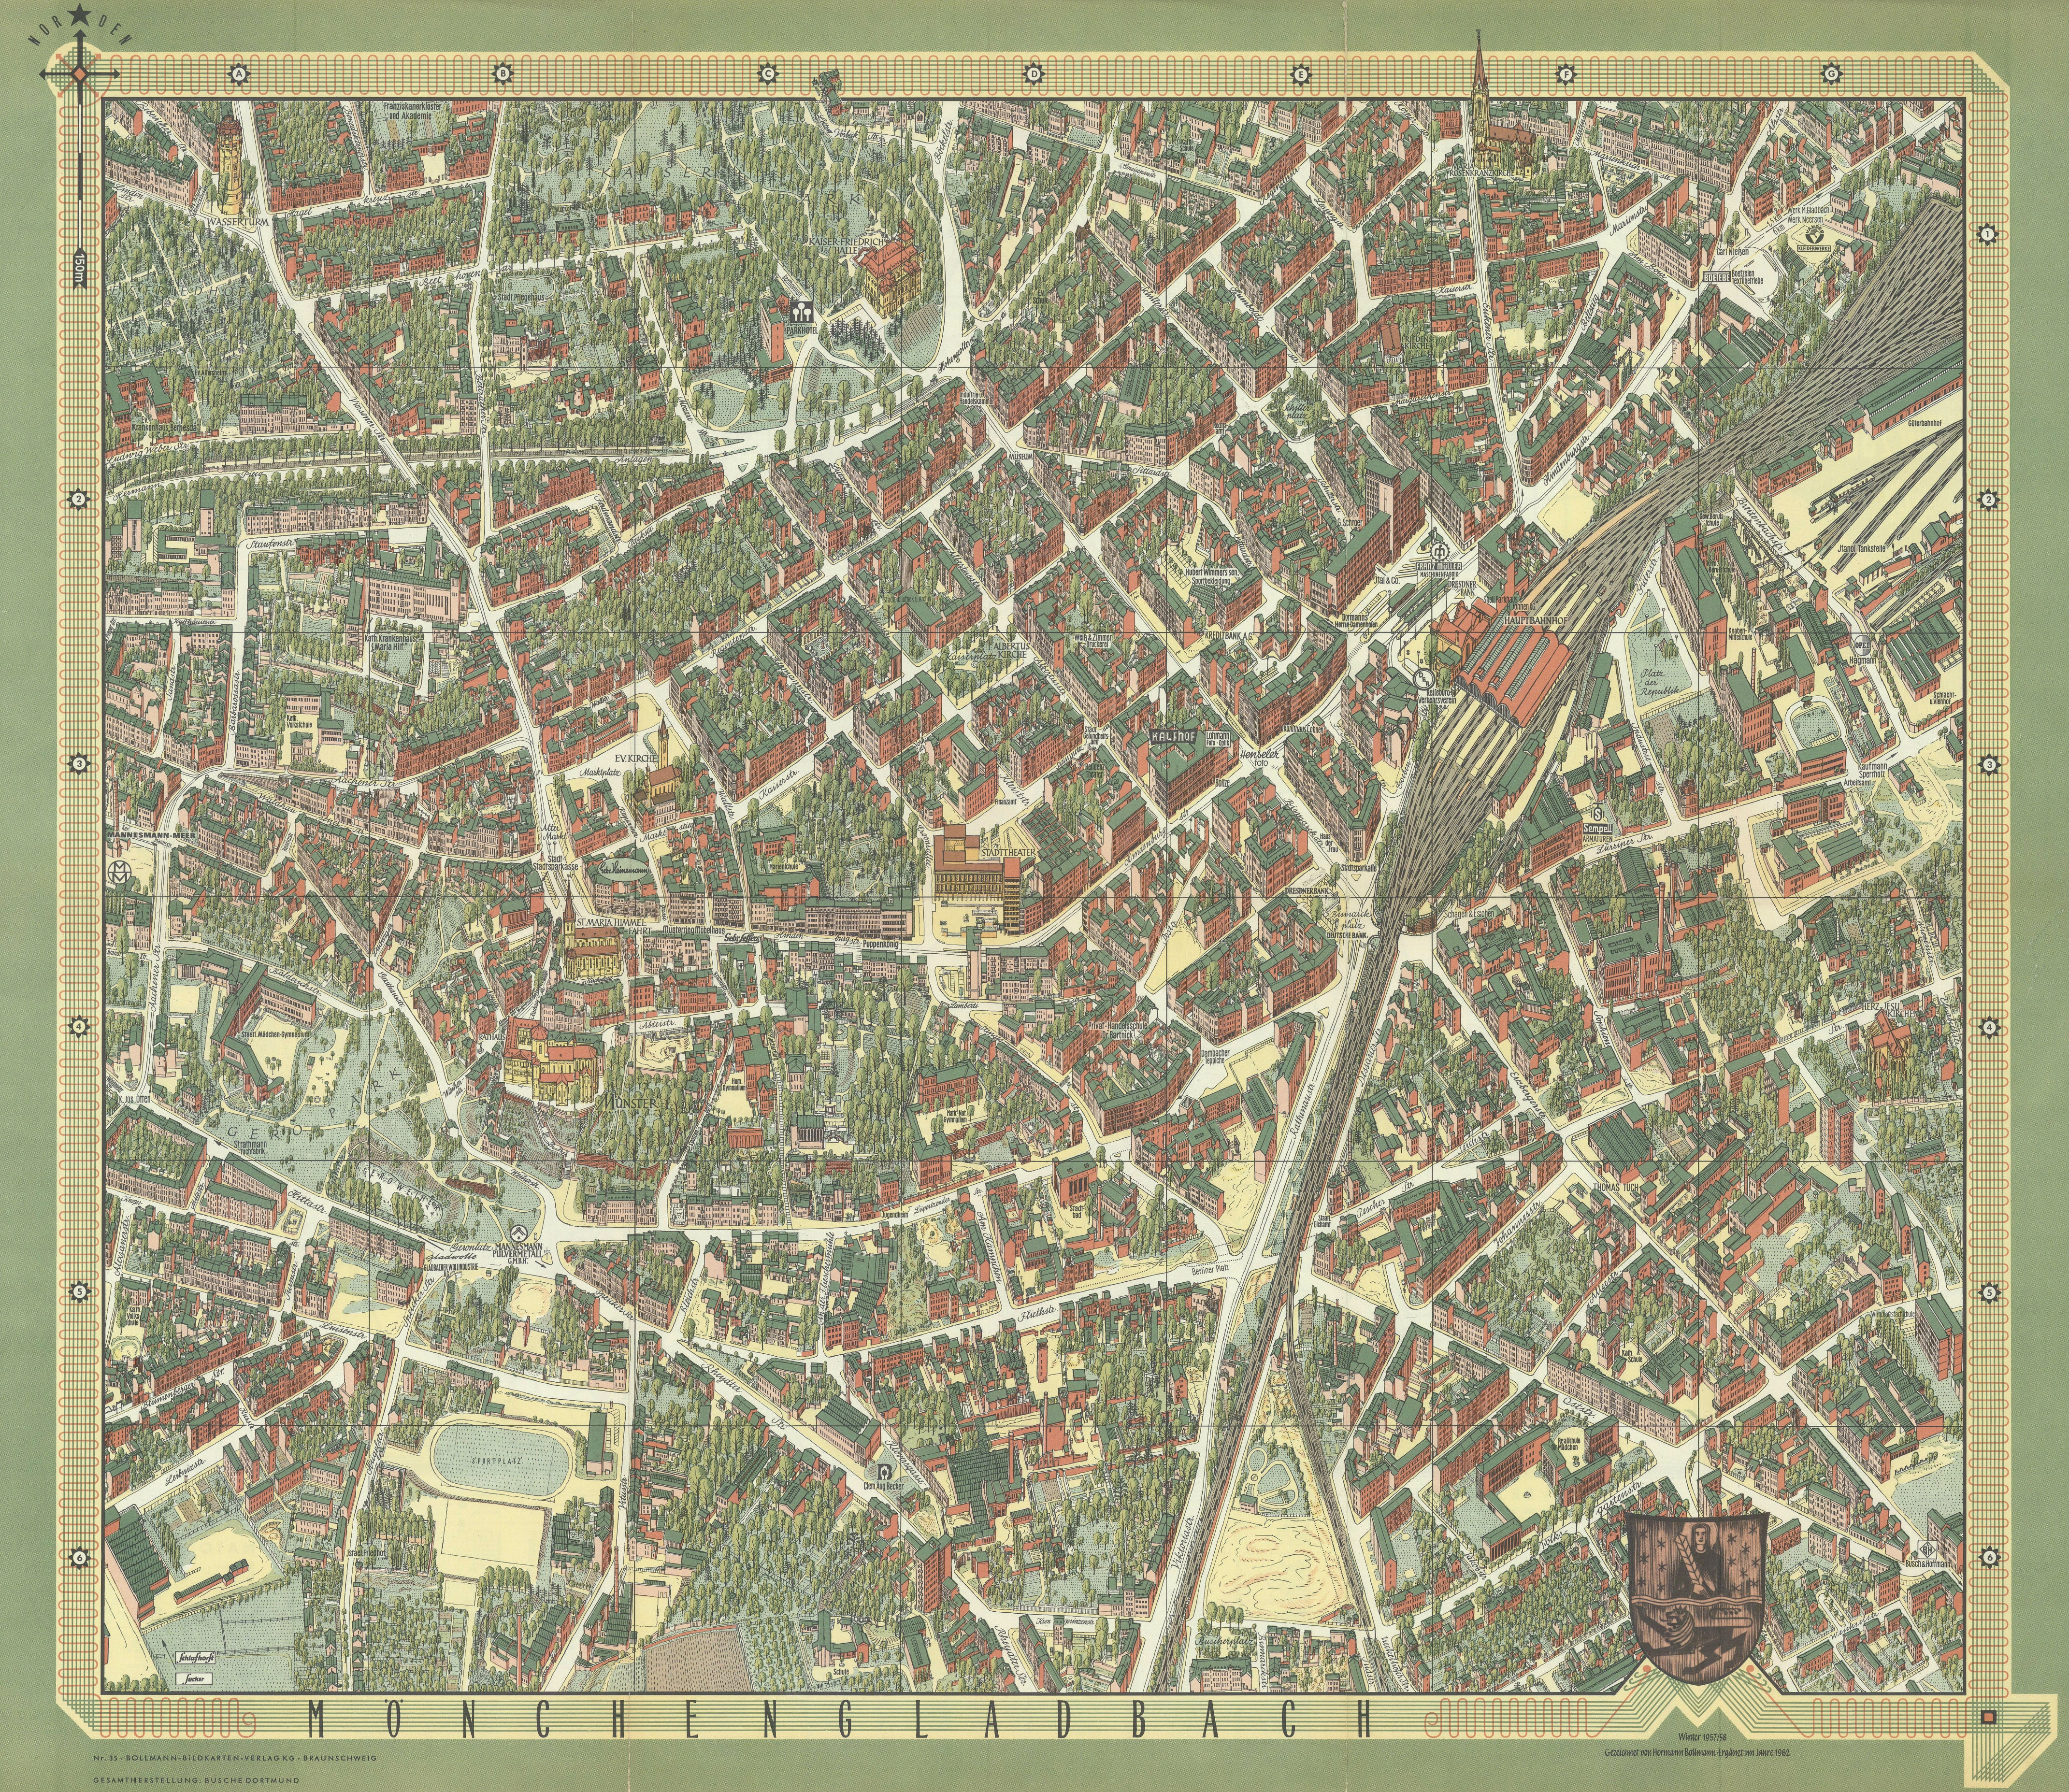 Mönchengladbach pictorial bird's eye view city plan by Hermann Bollmann 1962 map